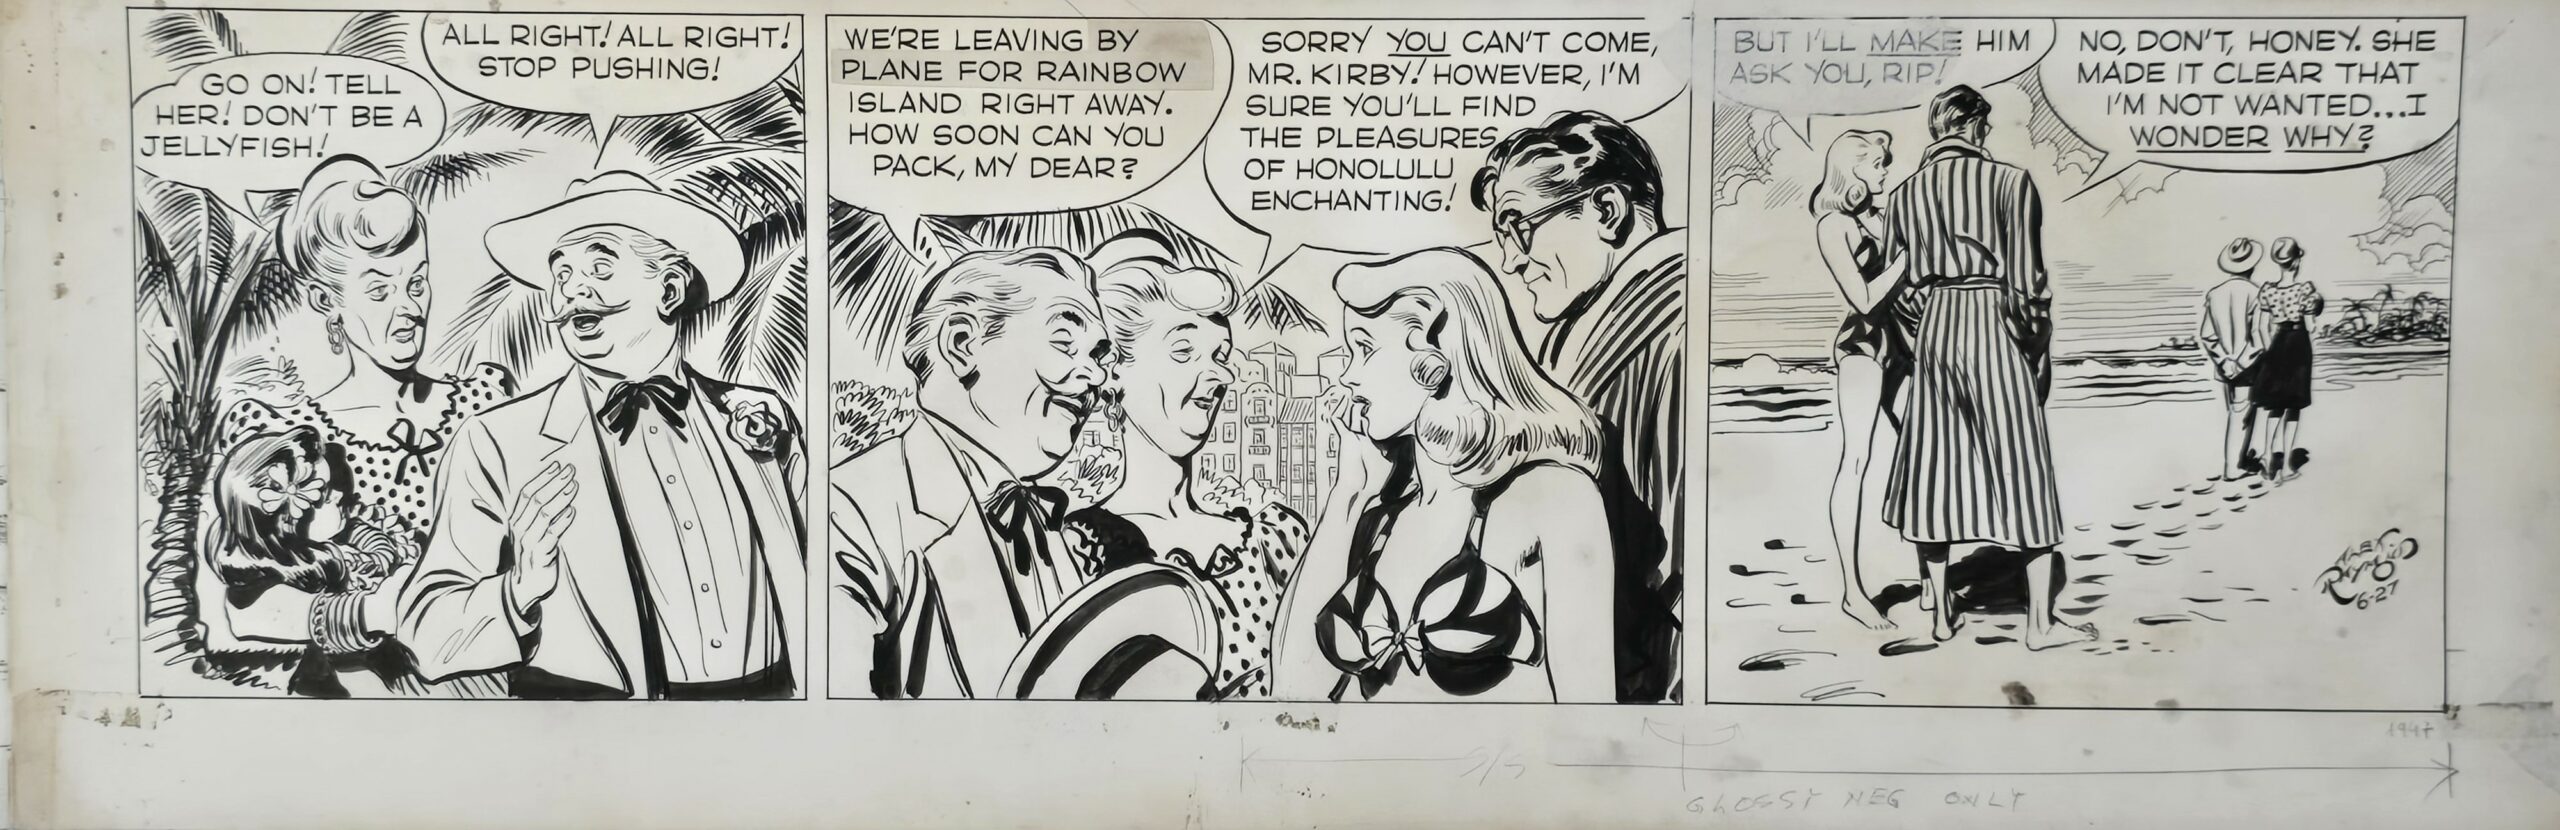 Comic Strip Original Art dated 6-27-1947 Raymond, Alex   – Rip Kirby